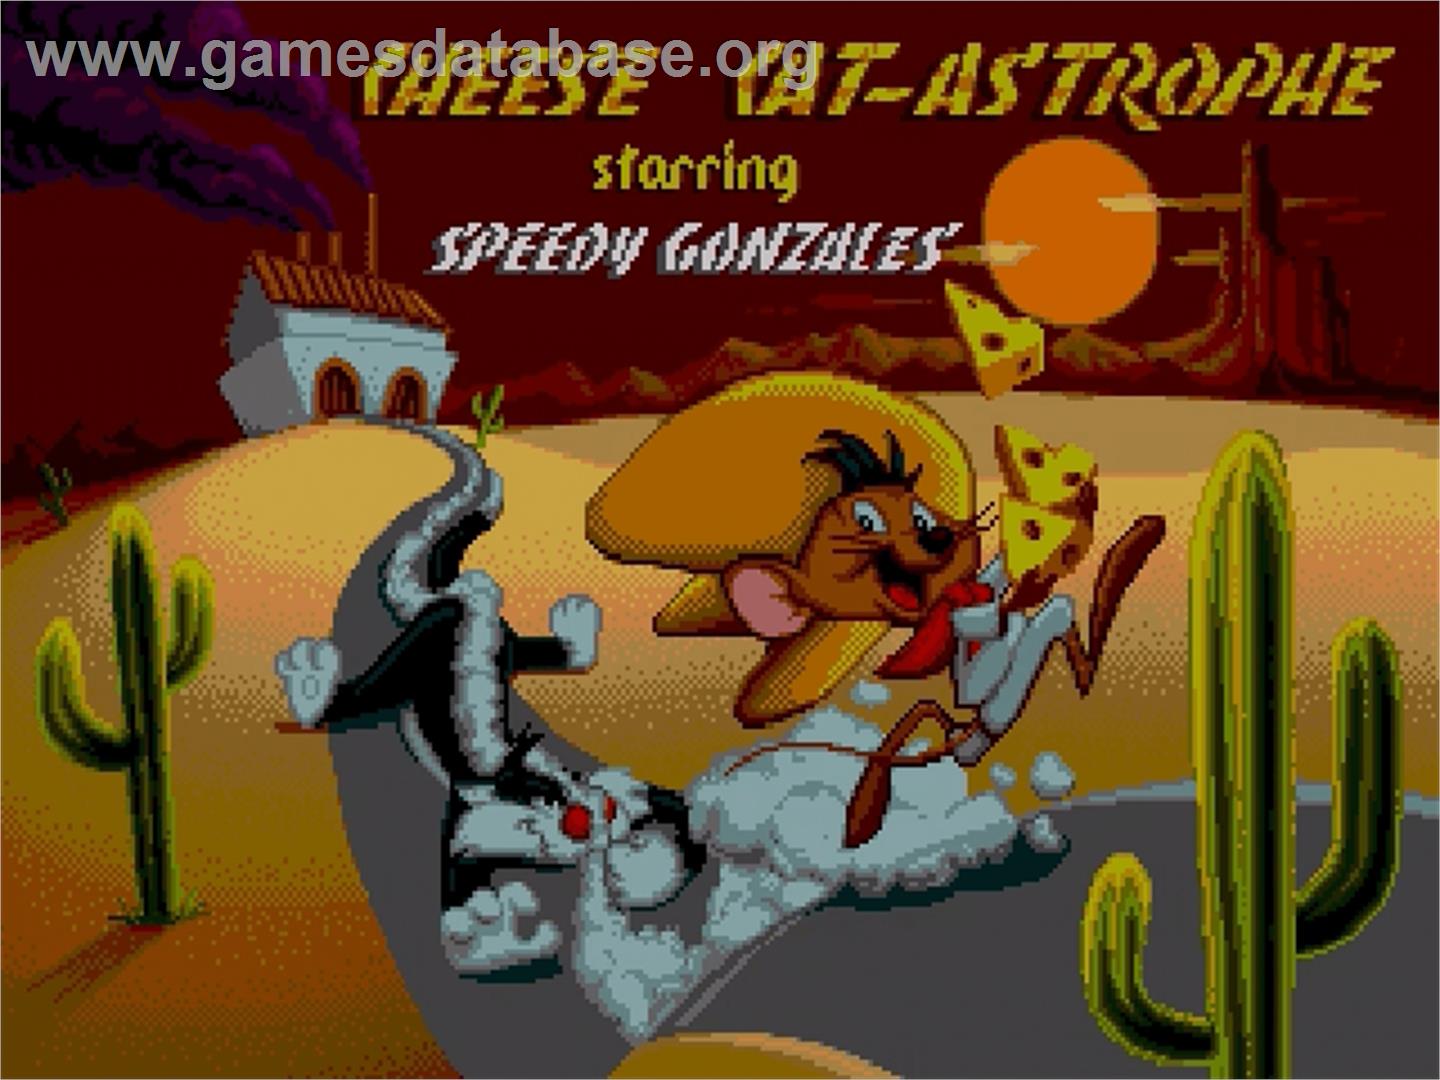 Cheese Cat-Astrophe starring Speedy Gonzales - Sega Genesis - Artwork - Title Screen